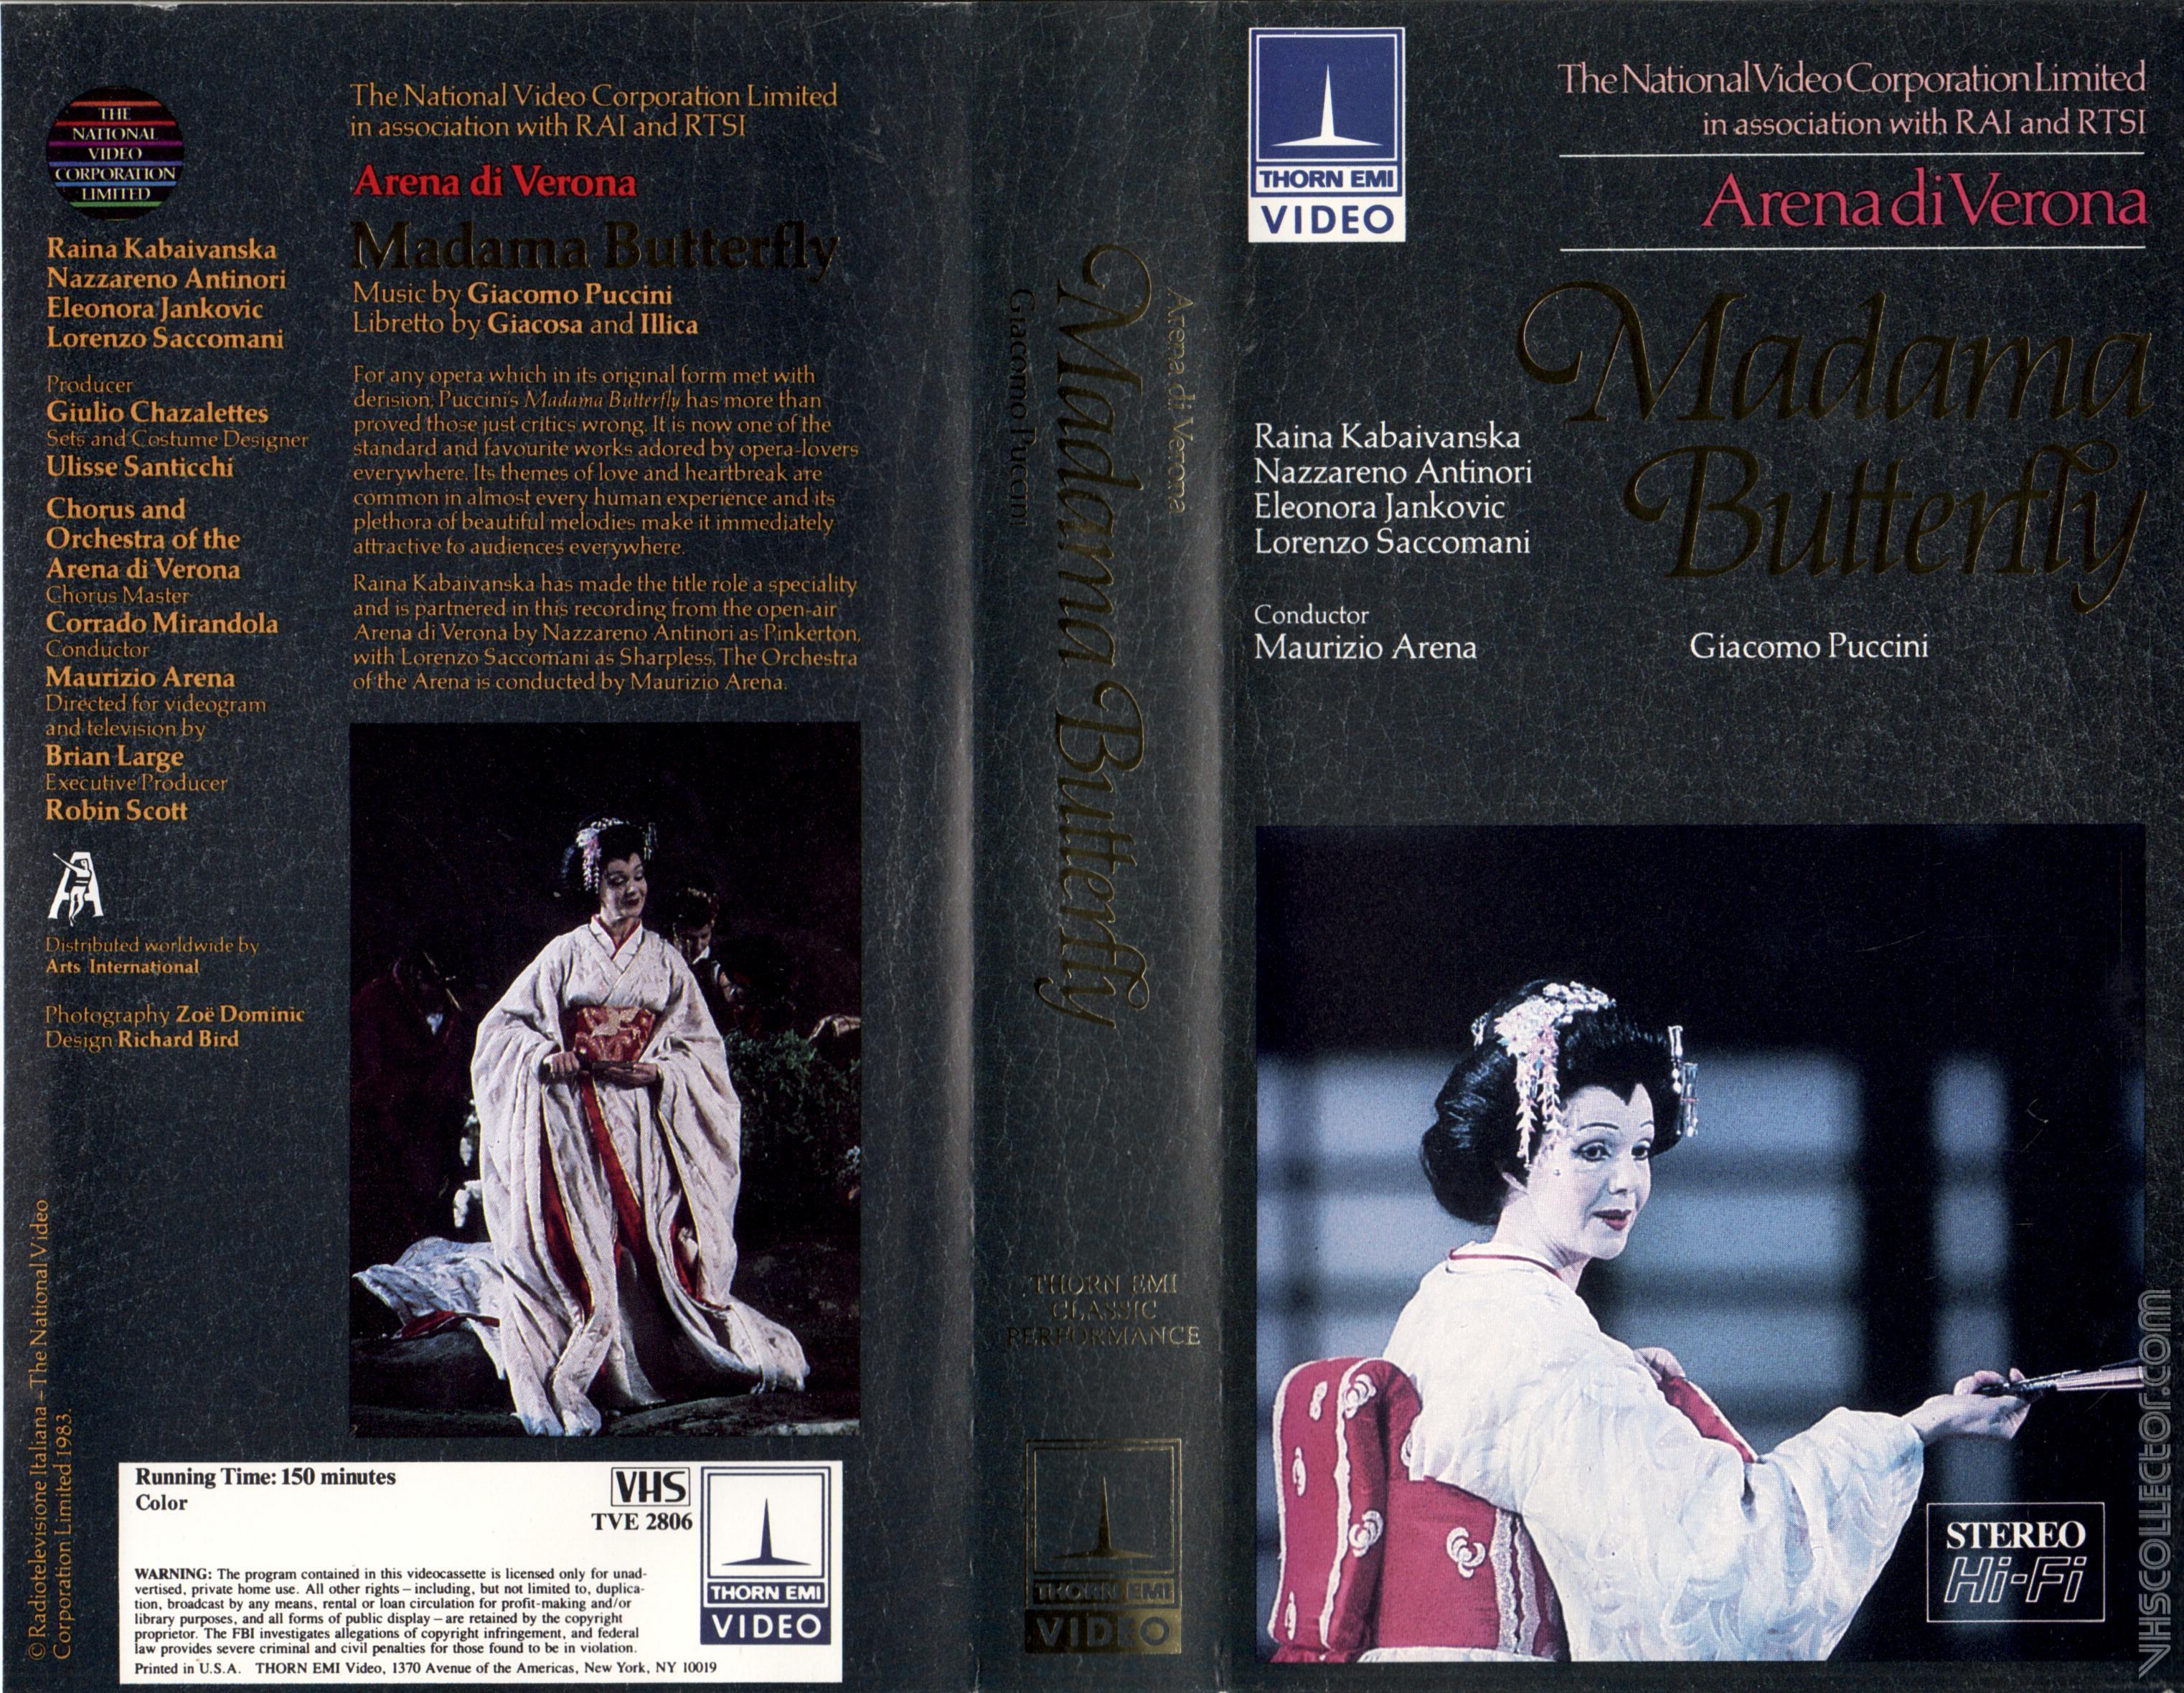 Madama Butterfly | VHSCollector.com